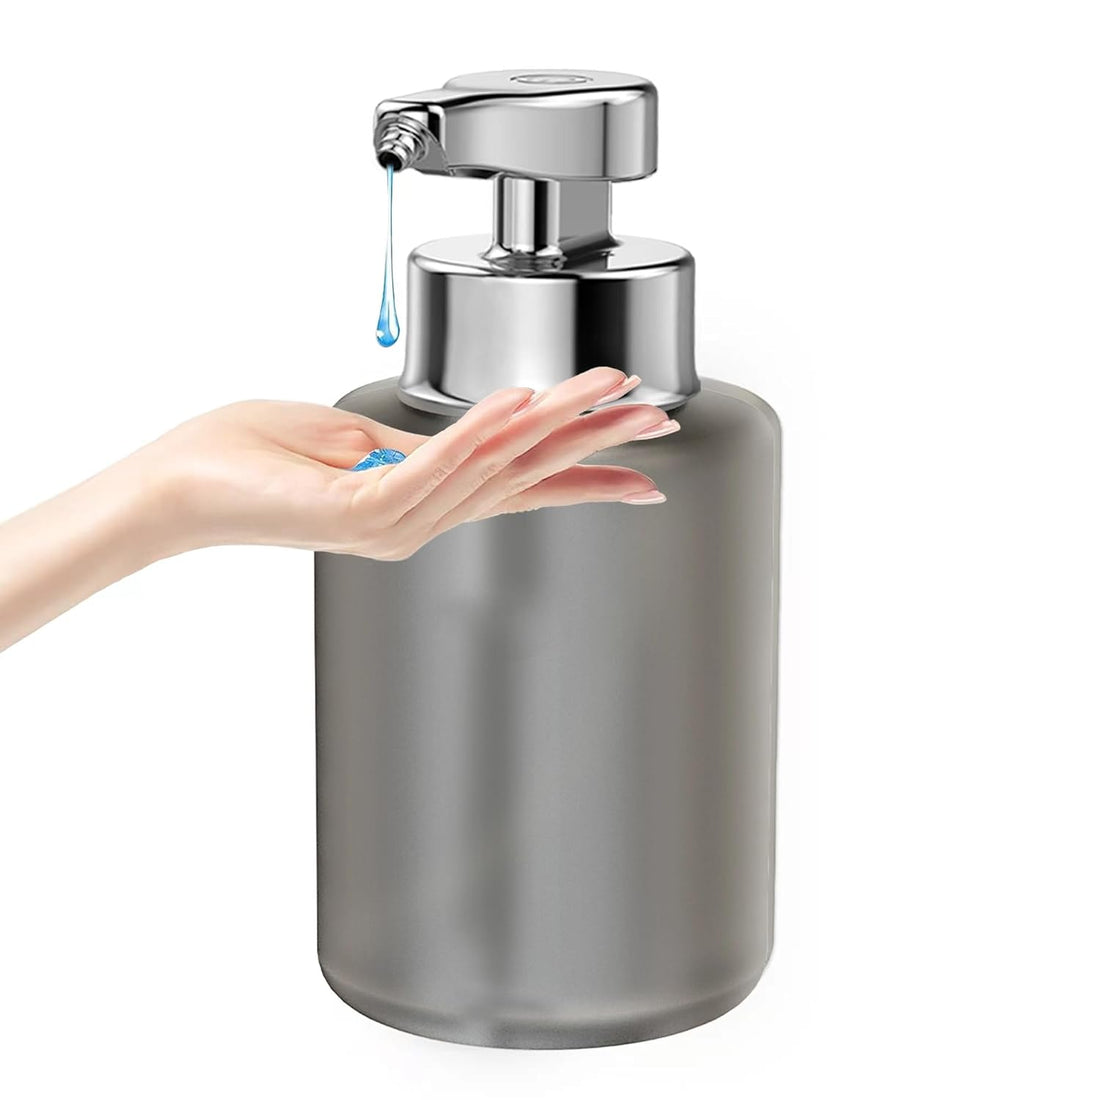 SYMINI Automatic Liquid Soap Dispenser, 11 oz Foam Hand Soap Dispenser, Rechargeable Soap Dispenser Touchless Soap Dispenser Foam Soap Dispenser for Bathroom Kitchen Office (Grey)